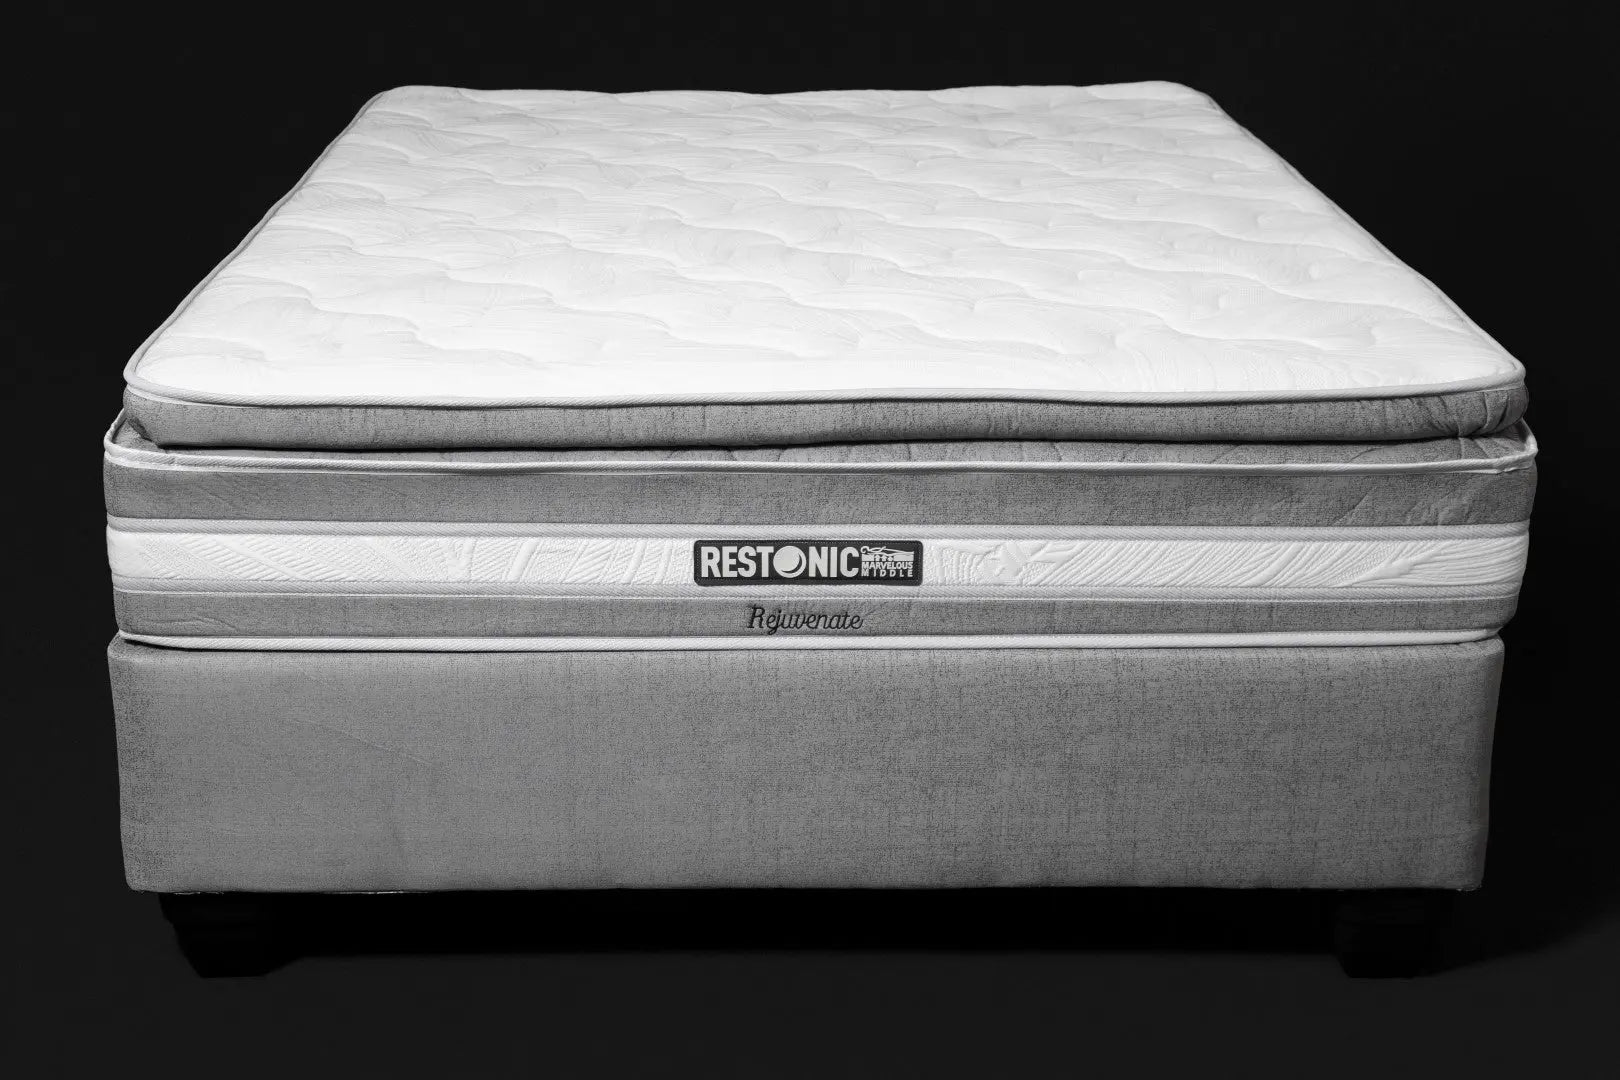 restonic 15 queen cotton 400 threadi mattress pad